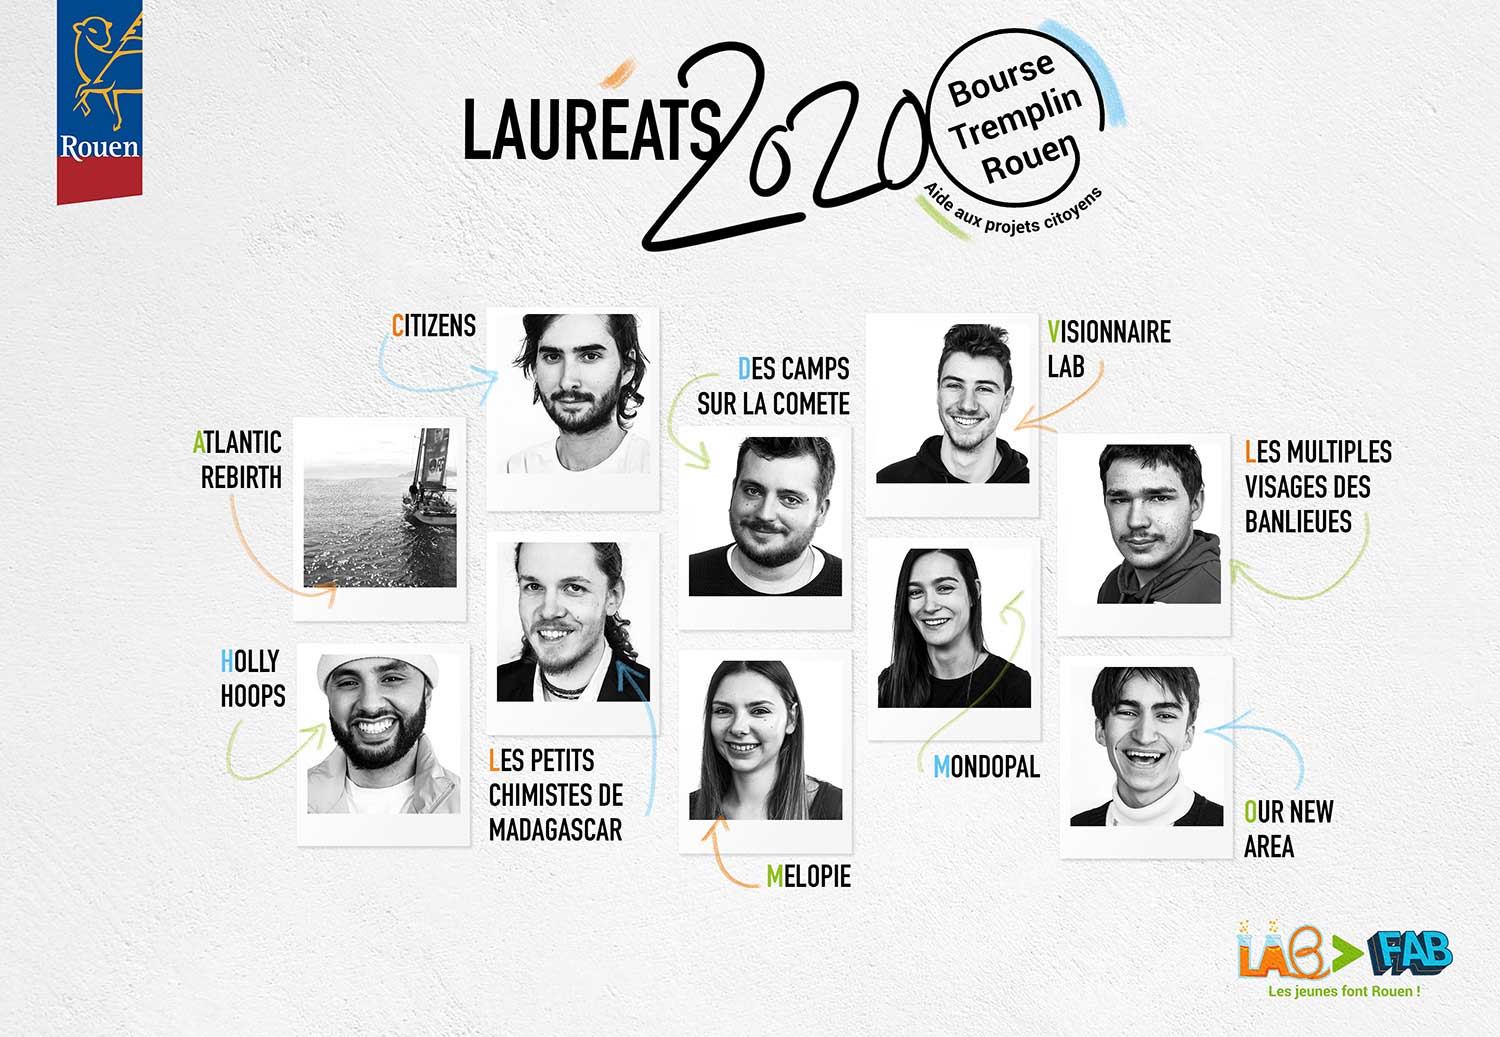 laureats-bourse-tremplin-2020.jpg